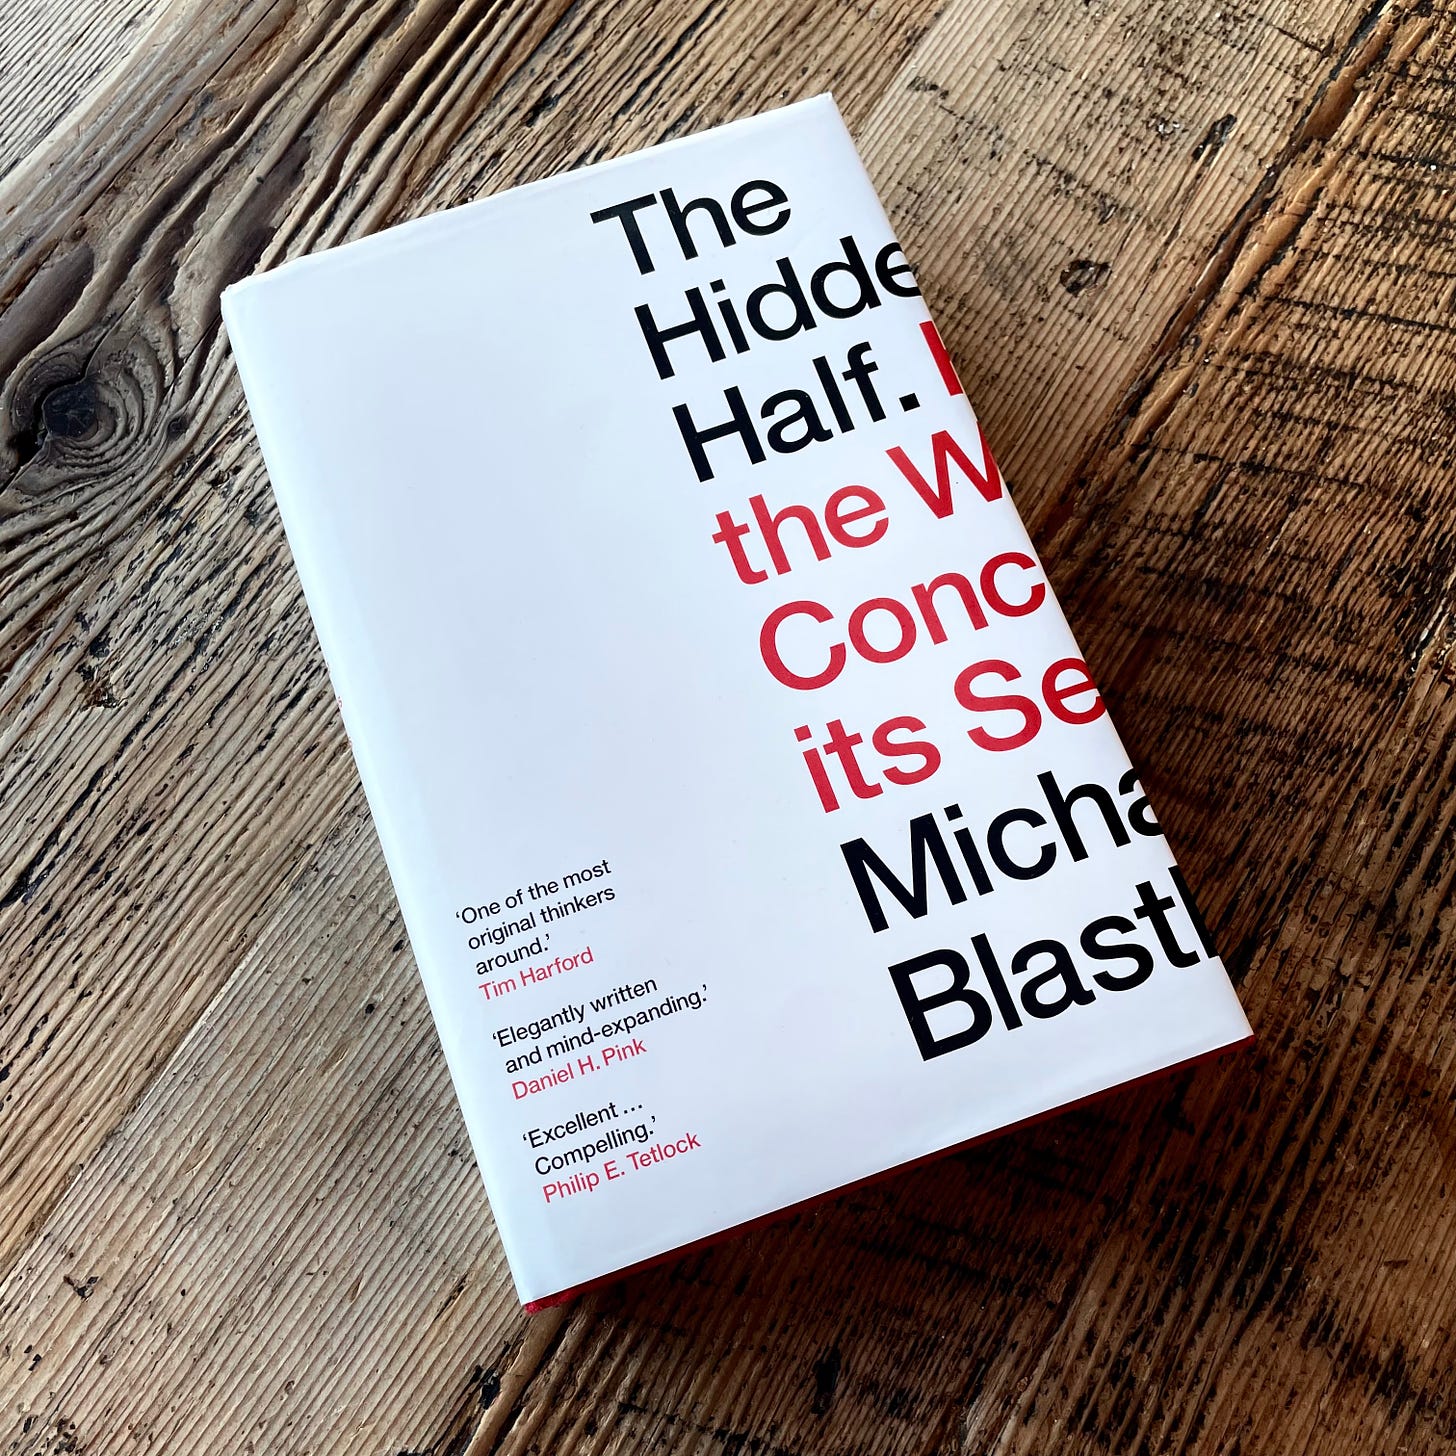 Michael Blastland.The Hidden Half: How the World Conceals Its Secrets. Atlantic Books, 2019.